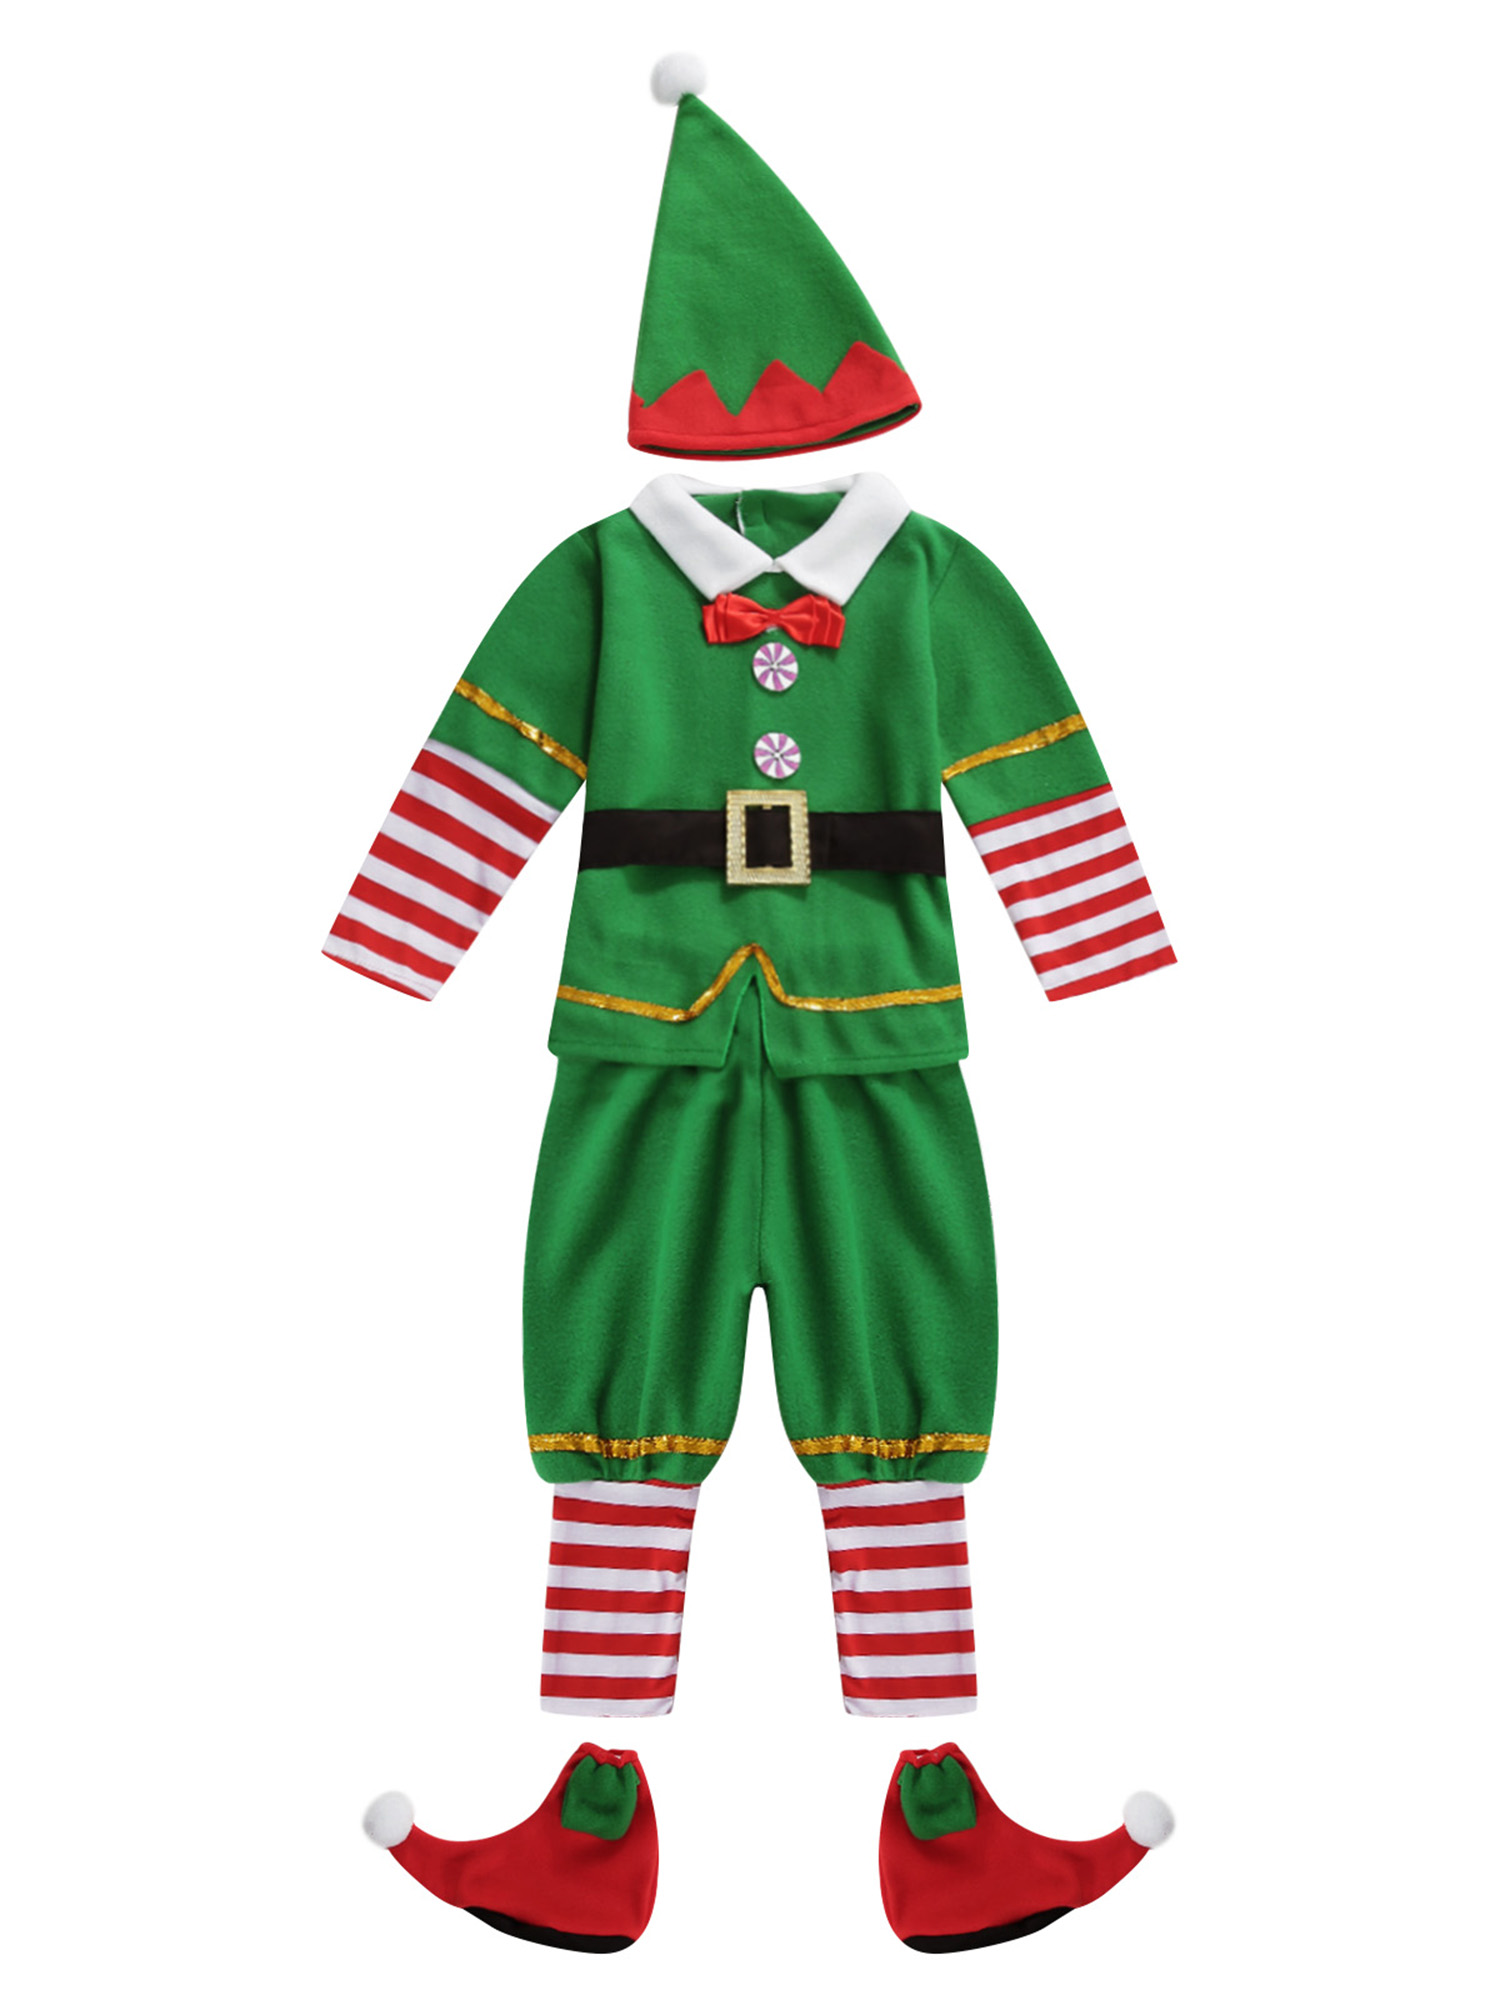 Holiday Elf Costume for Kids Boys Girls Santas Helper Kids Christmas Costumes - image 1 of 1